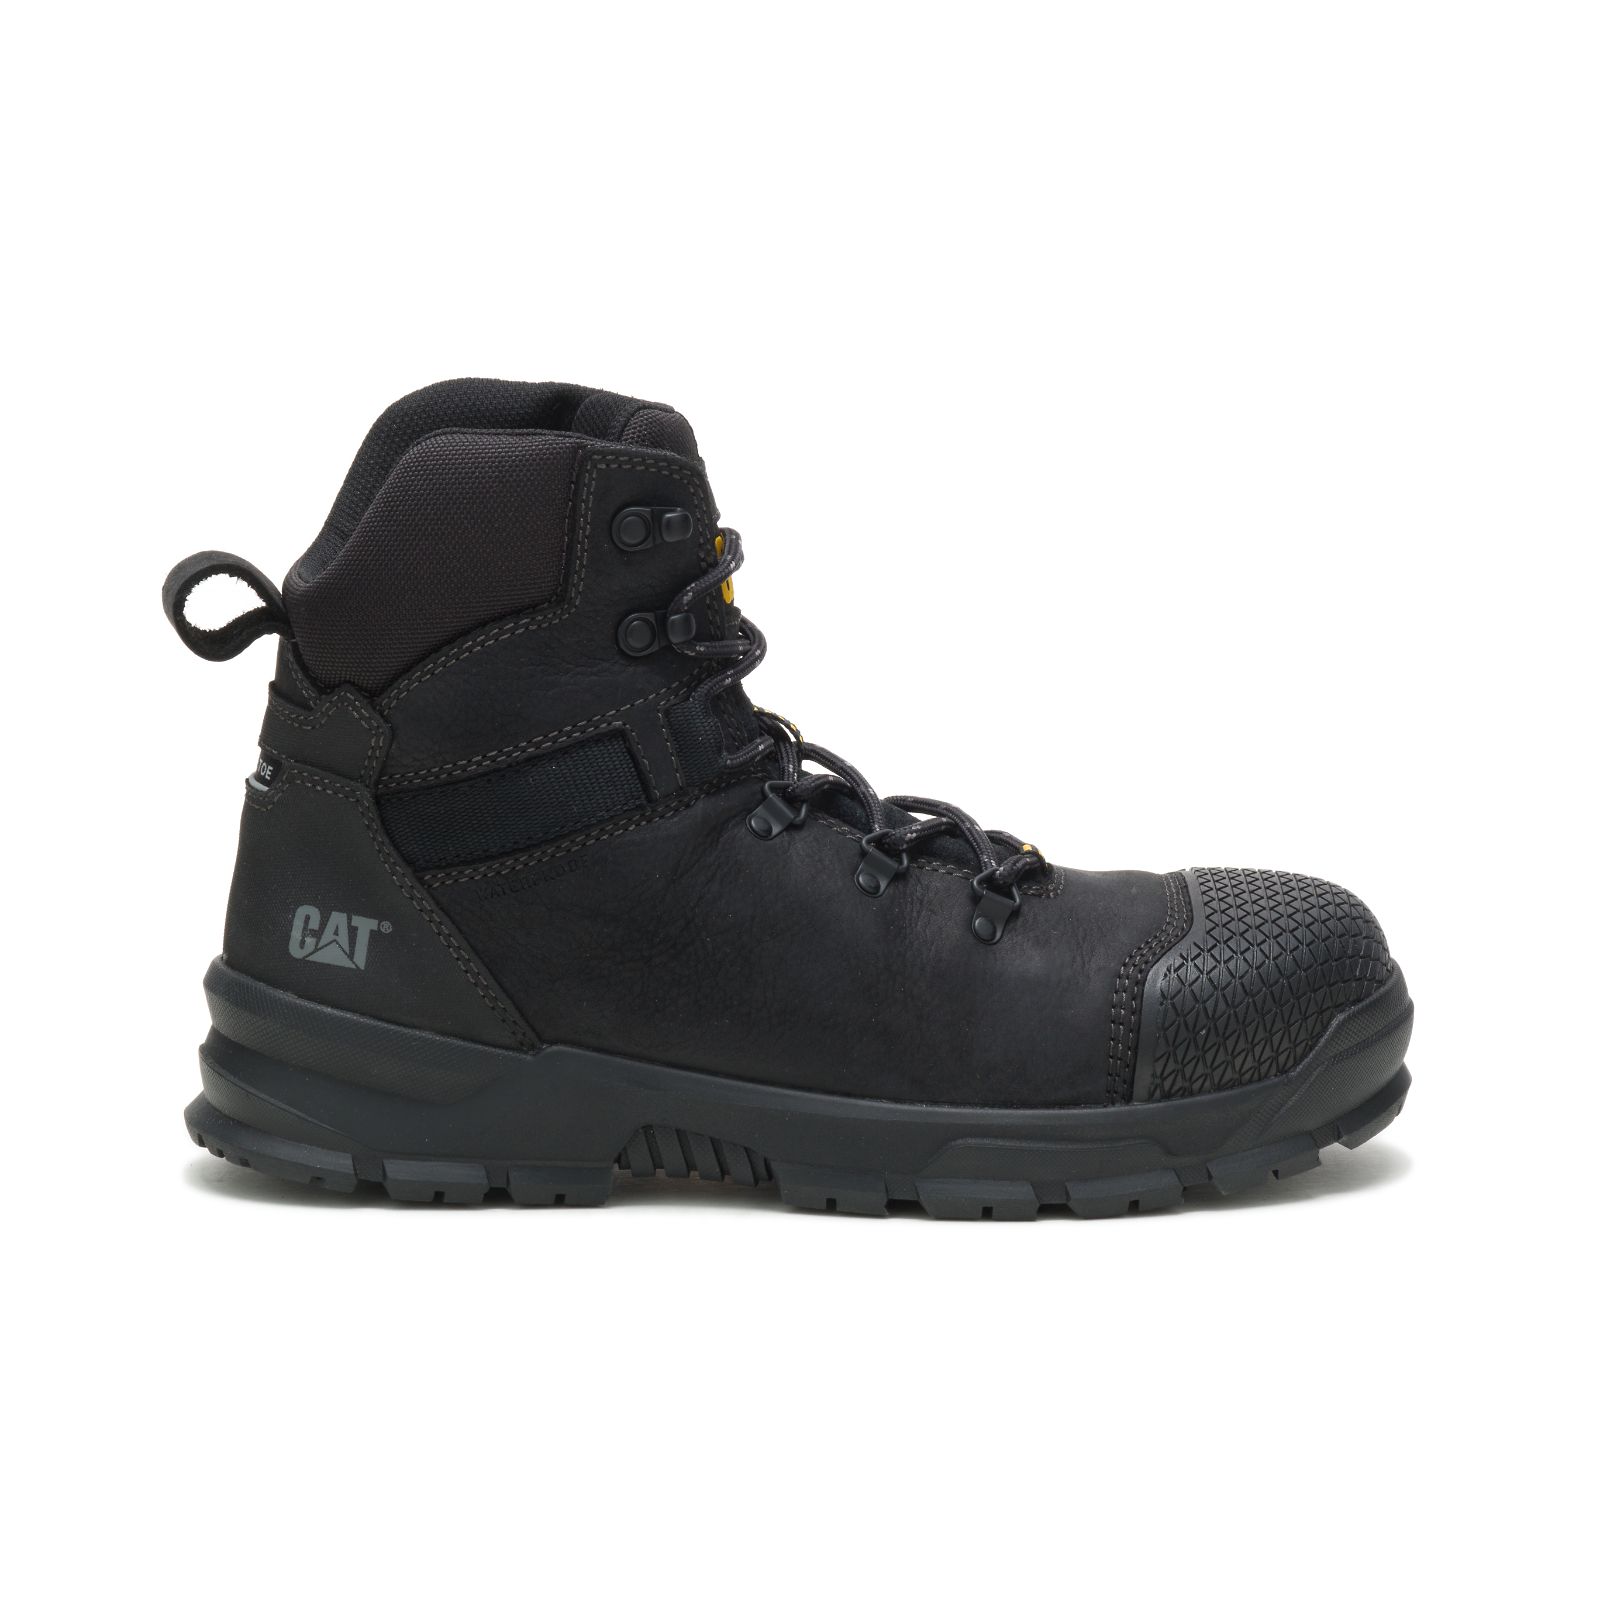 Caterpillar Work Boots UAE - Caterpillar Accomplice X Waterproof Steel Toe Mens - Black ZMXCEI738